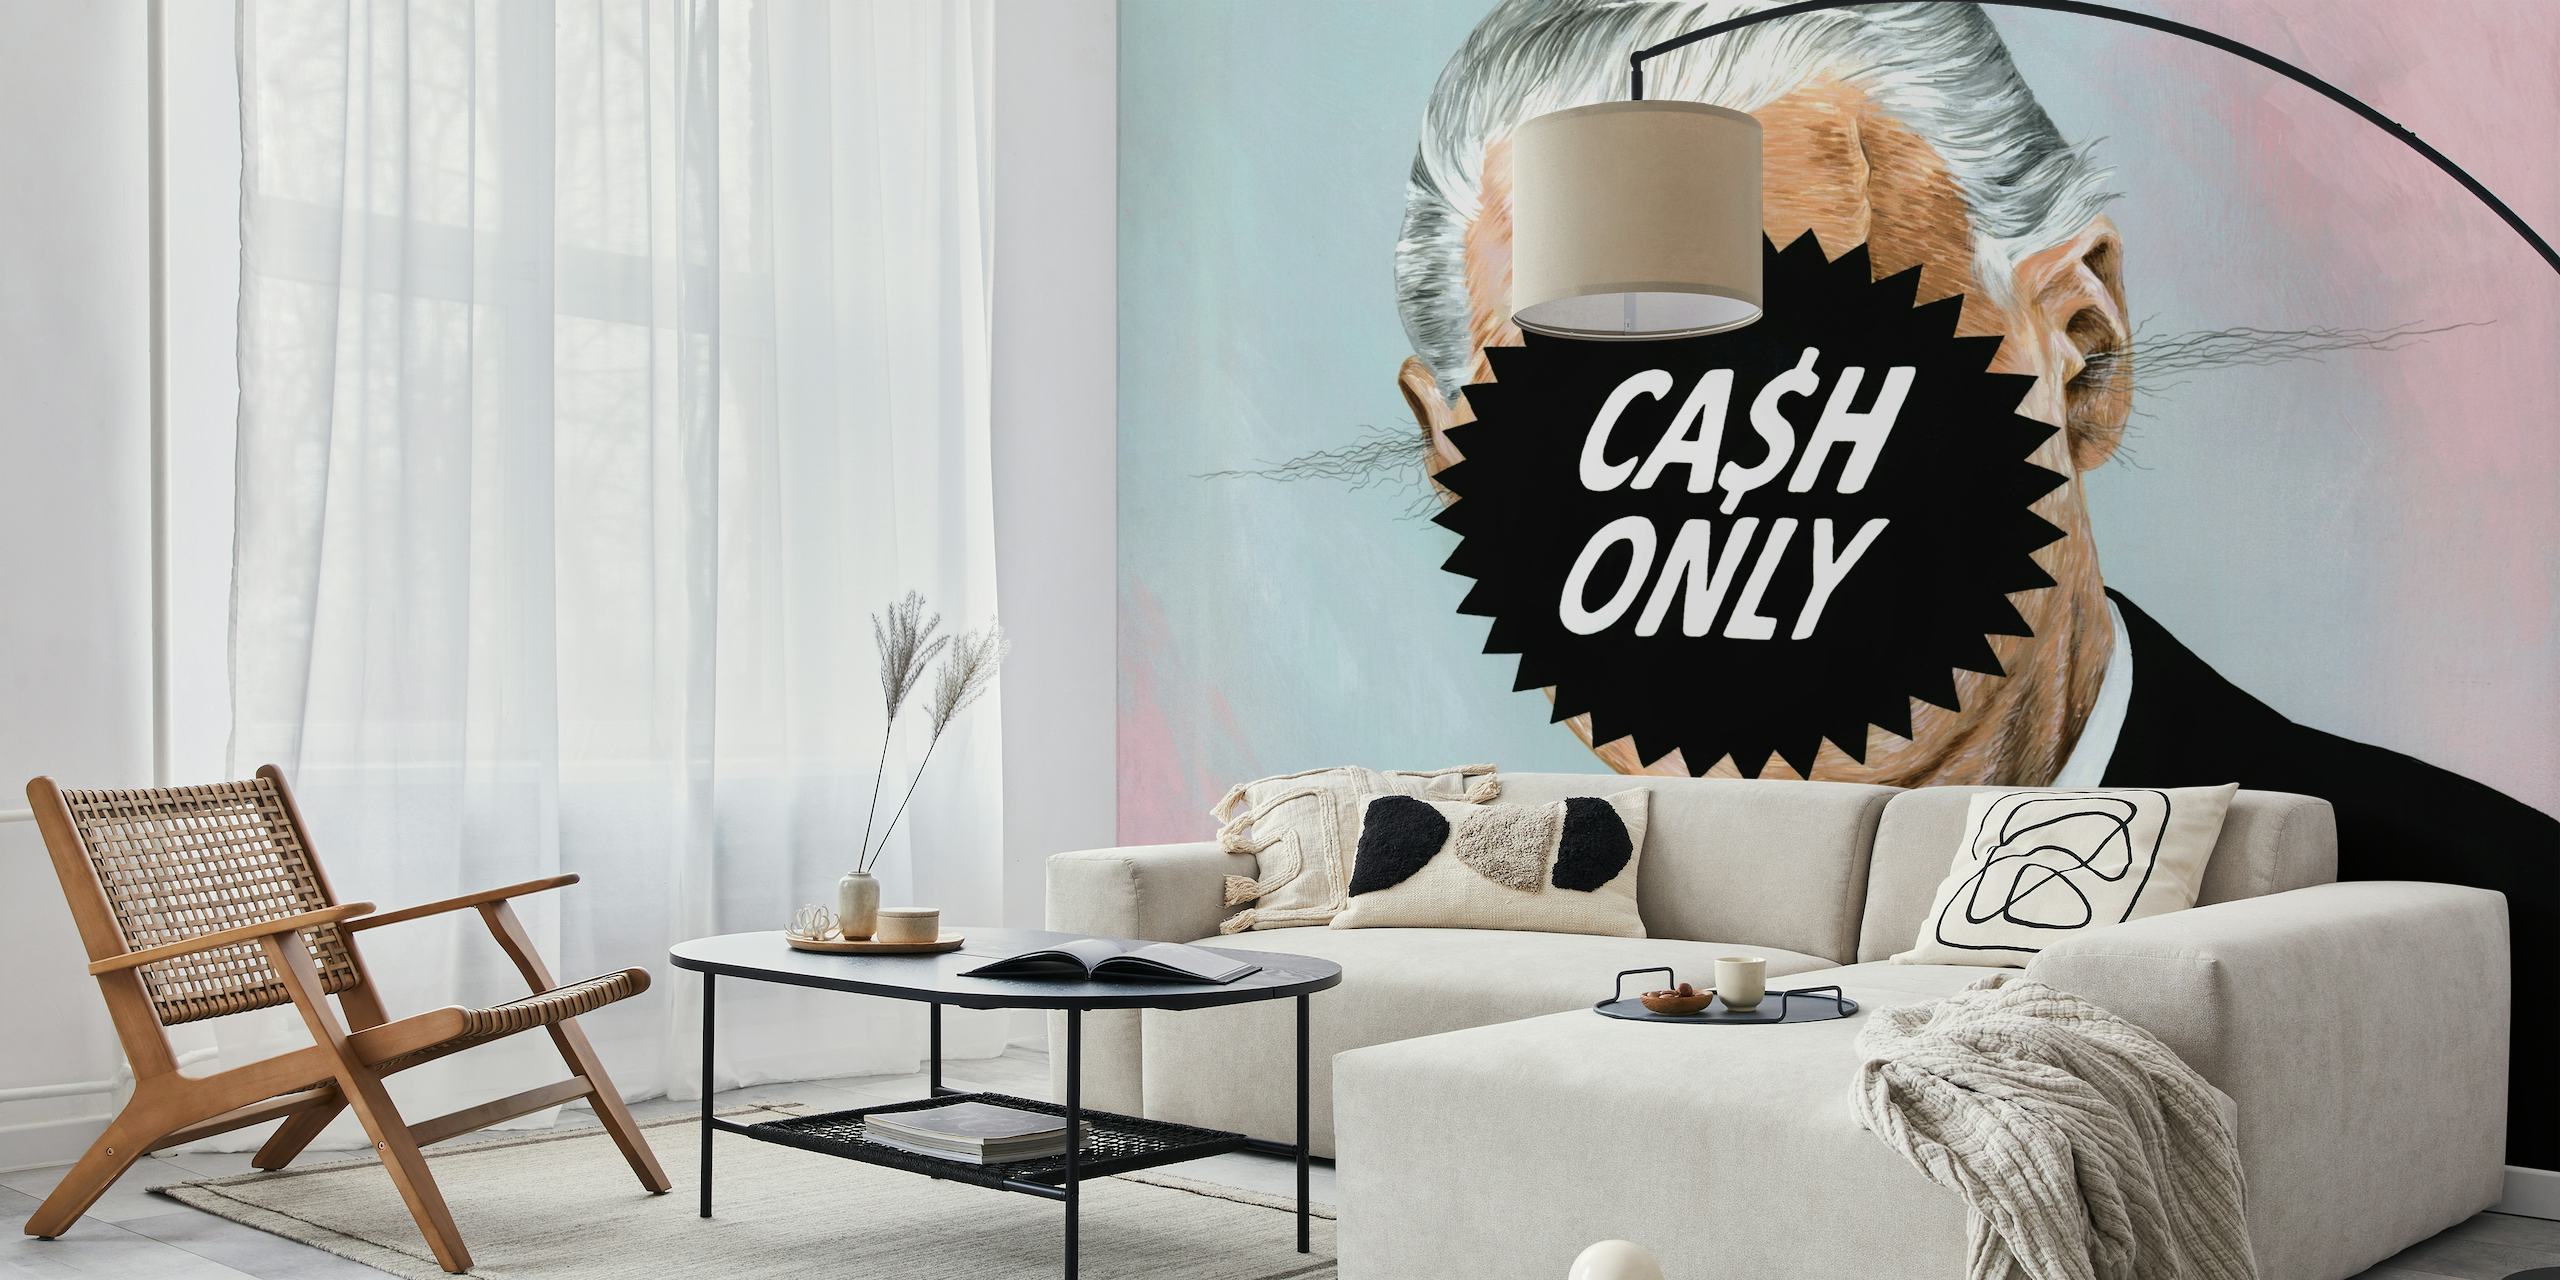 Cash Only wallpaper